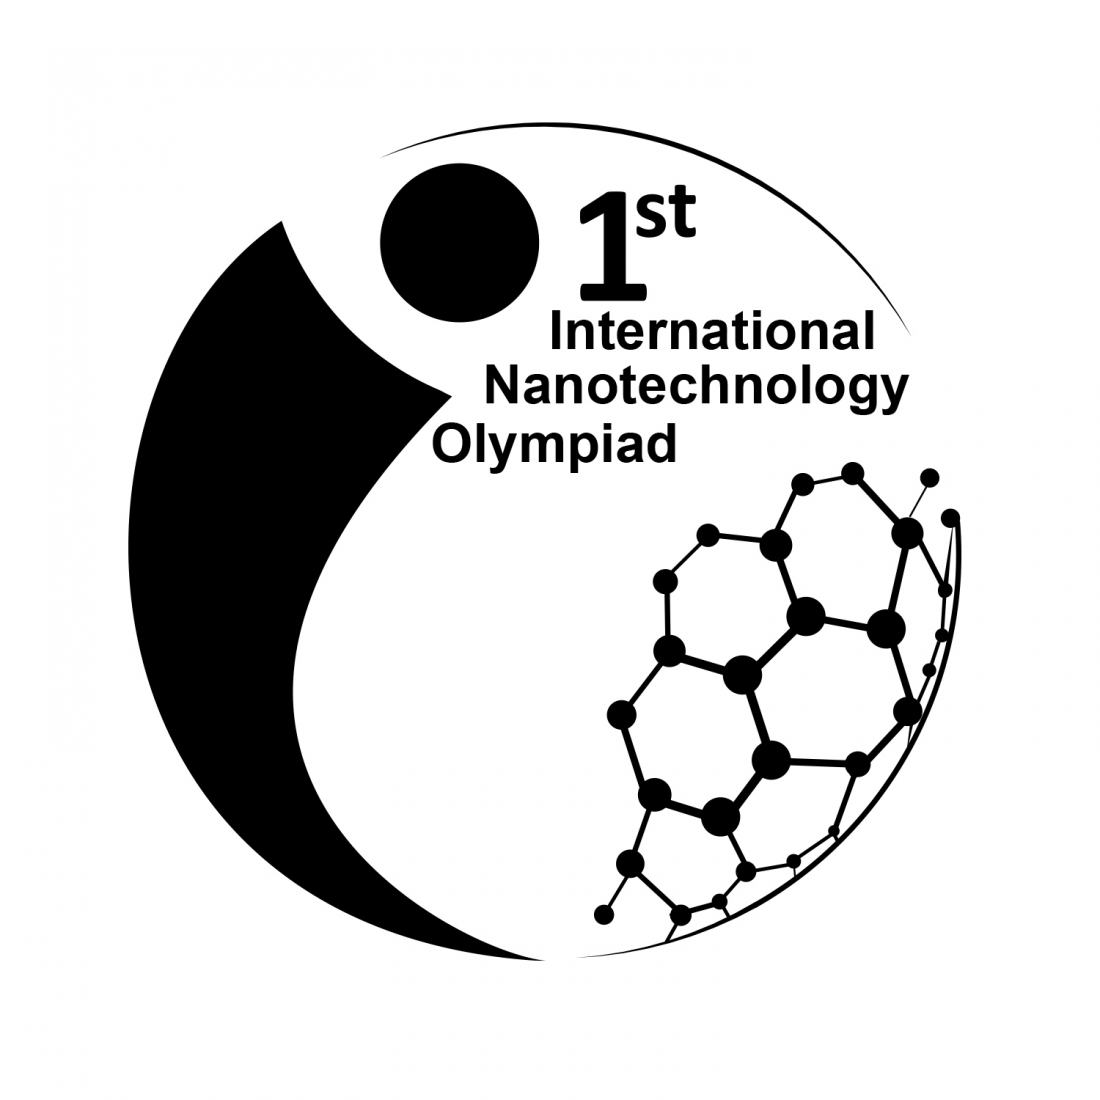 The First International Nanotechnology Olympiad